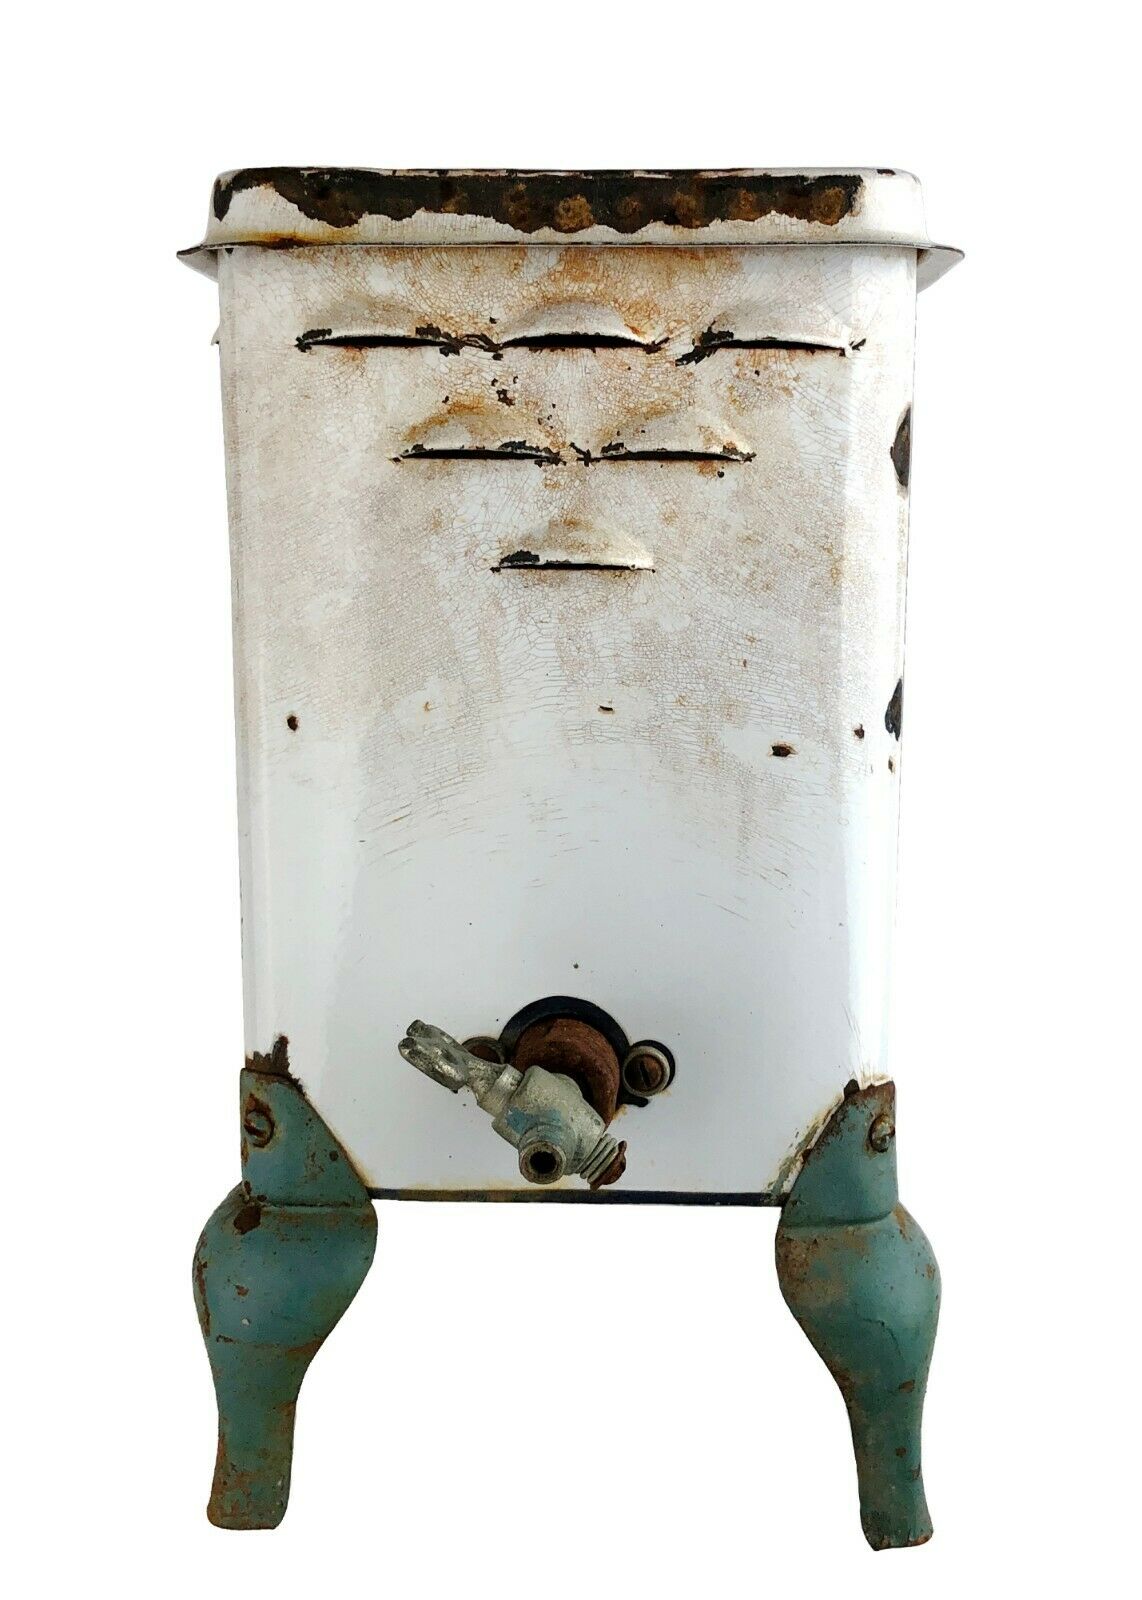 Freestanding Small Antique Vintage Gas Heater Enamel On Steel Alll Original